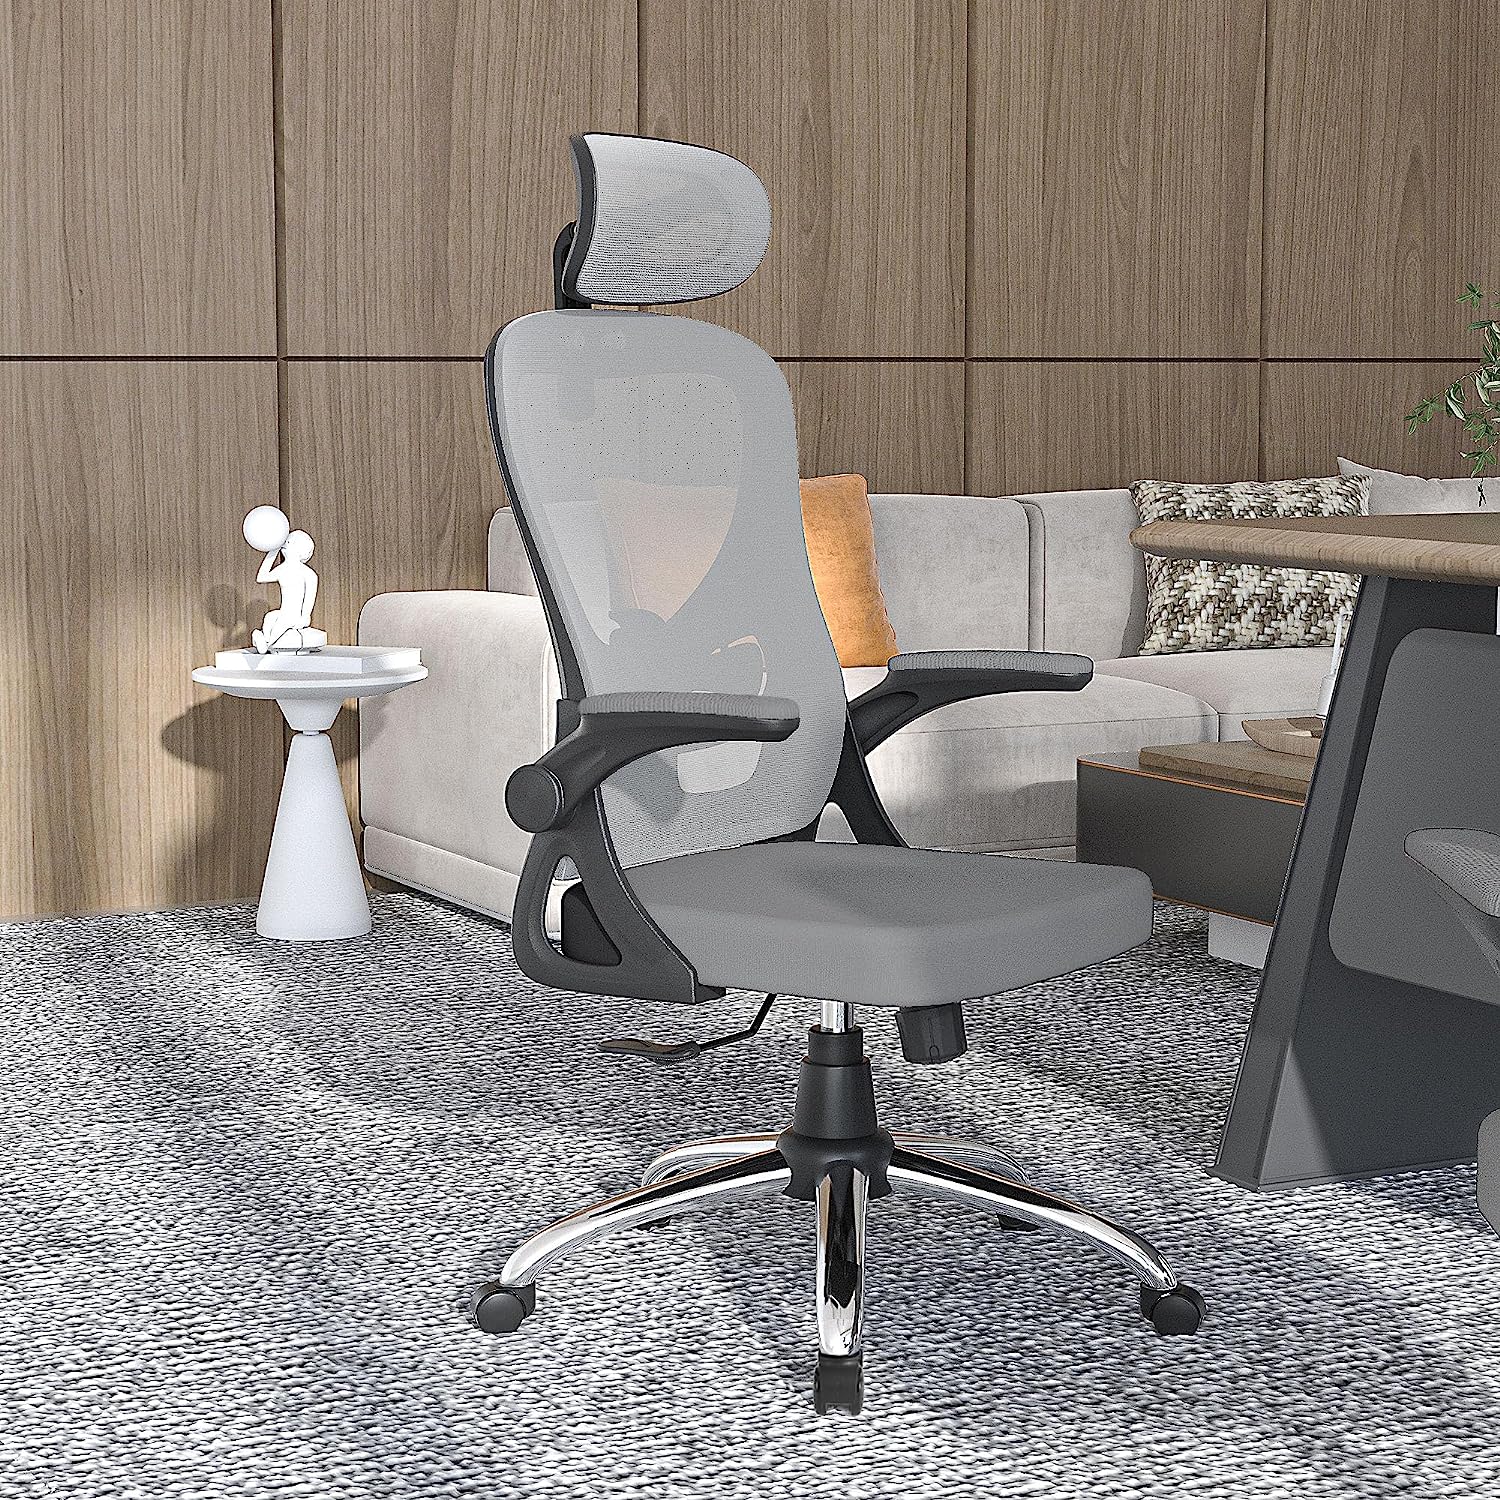 VECELO High Back Ergonomic Office Chair with Adjustable Headrest Armrest Mesh Lumbar Support, Swivel Wheels for Home Study Work